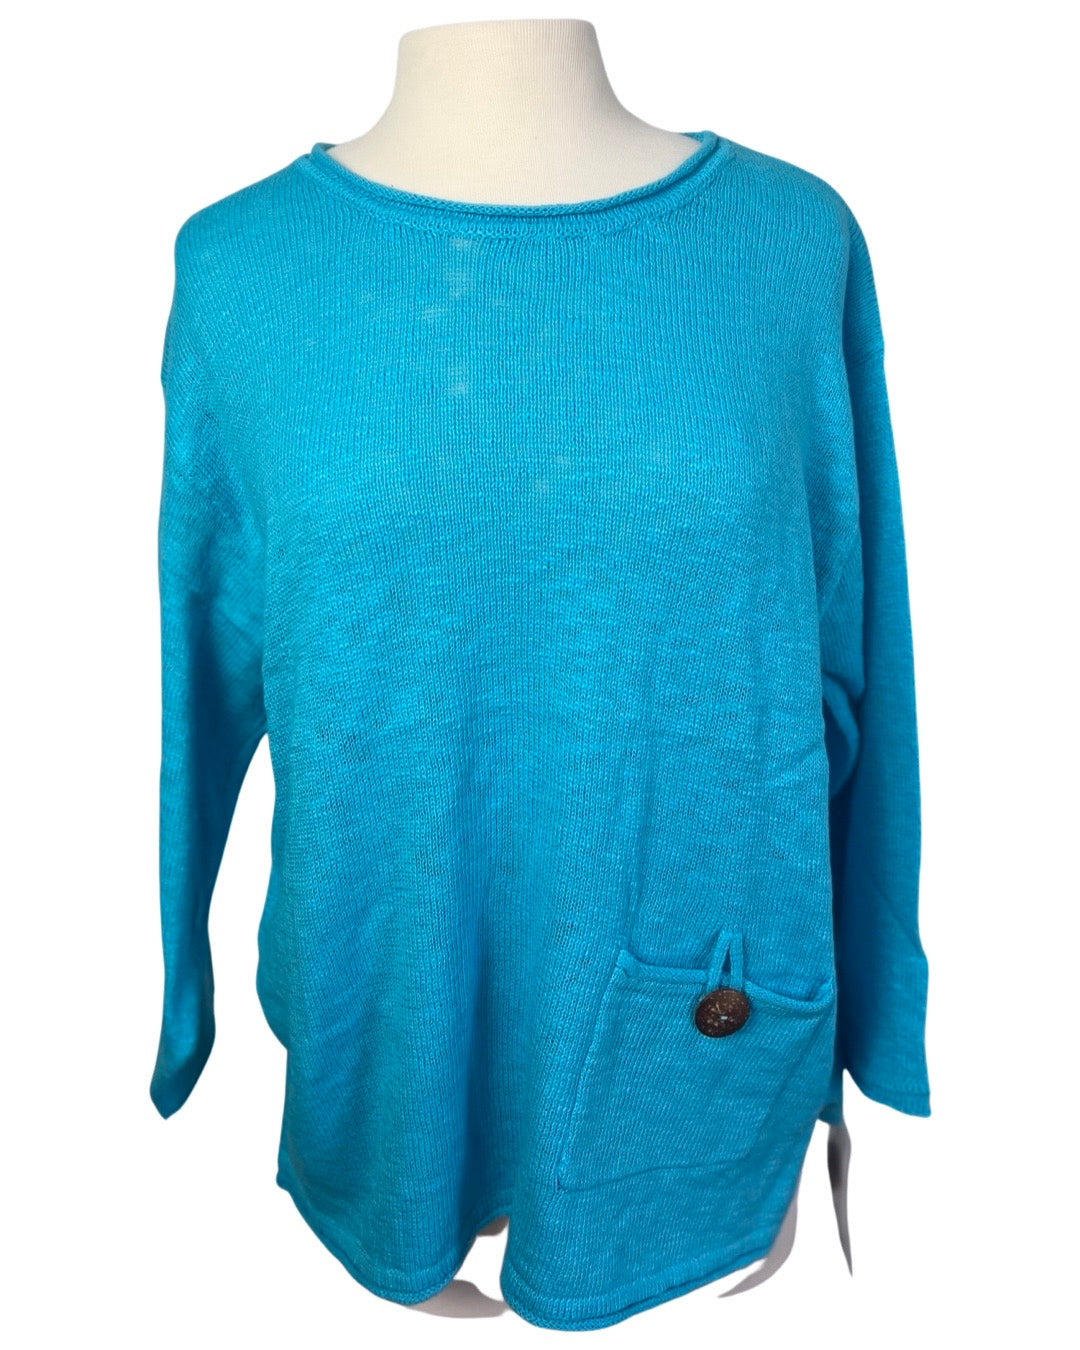 Lulu B Blue Lightweight Sweater with Pocket